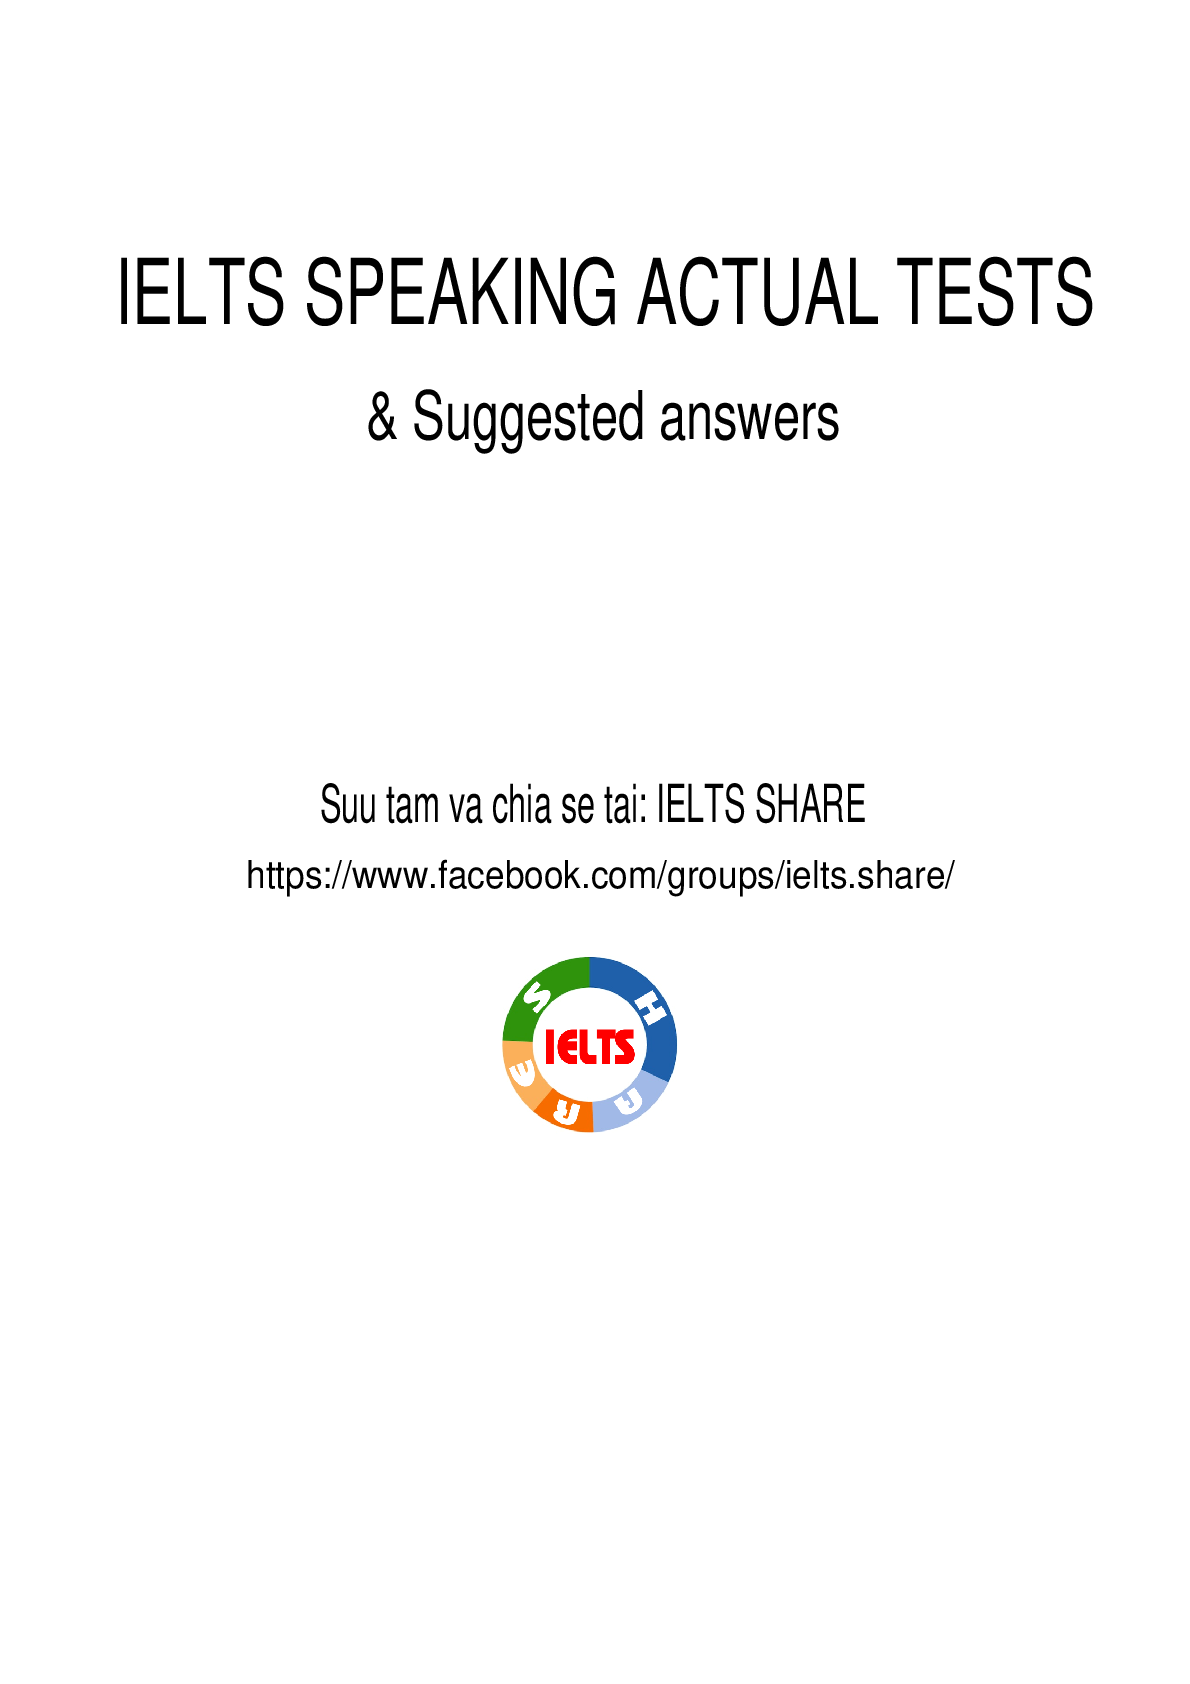 Sách IELTS Recent Actual Test PDF | Xem online, tải PDF miễn phí (trang 1)